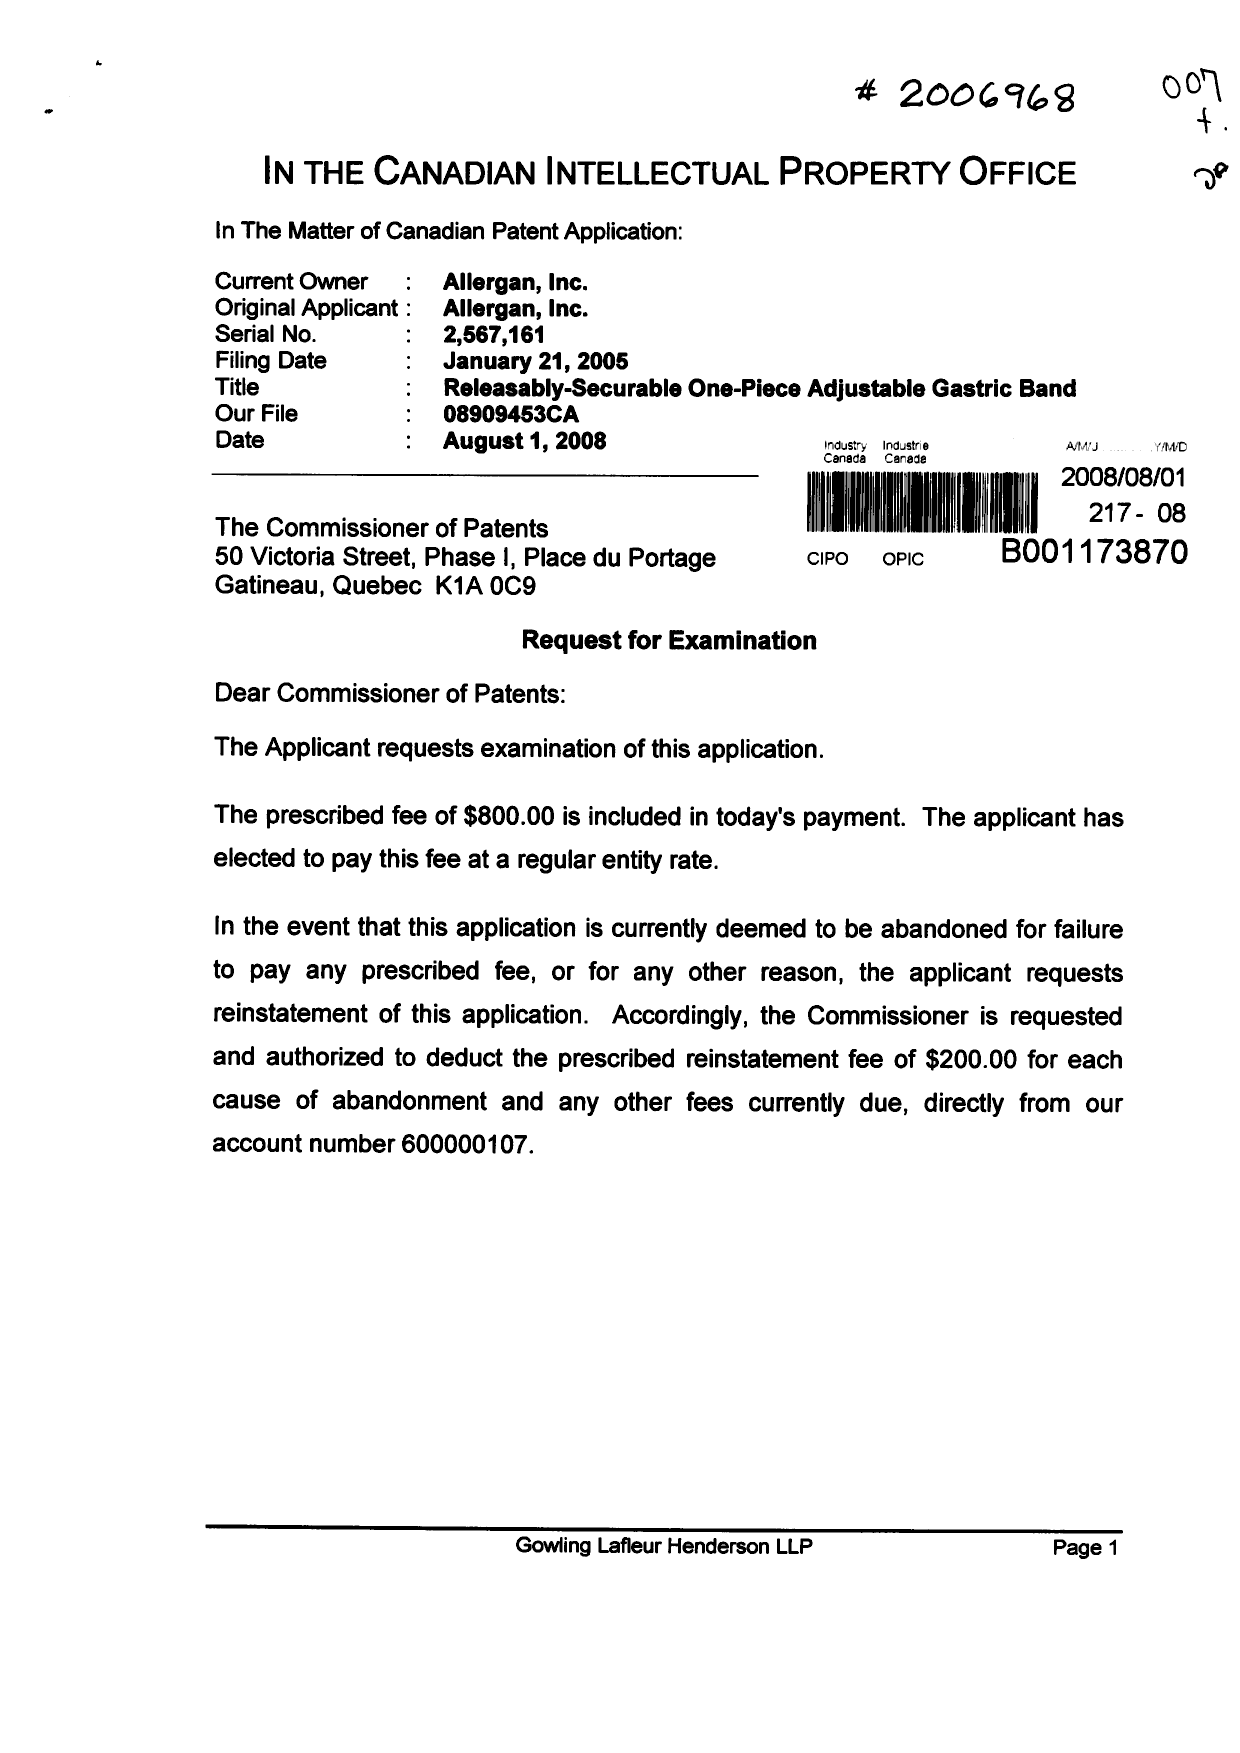 Canadian Patent Document 2567161. Prosecution-Amendment 20080801. Image 1 of 2